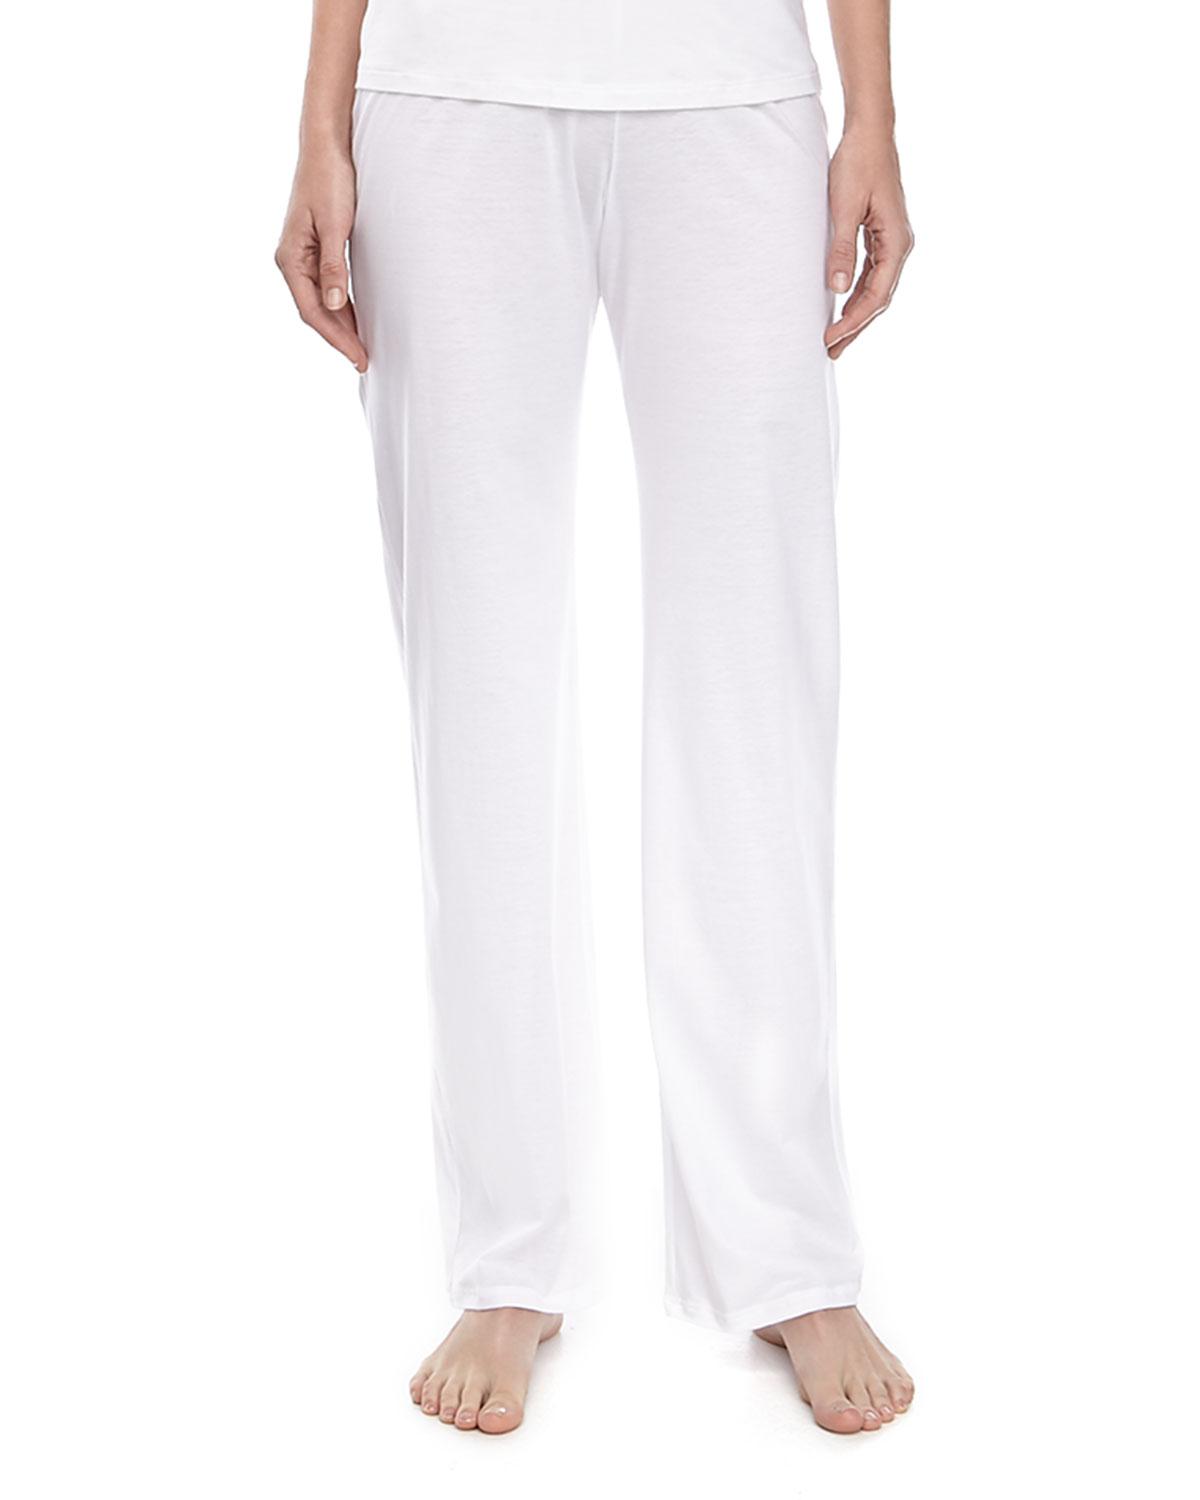 Lyst - Hanro Pima Cotton Drawstring Pants in White - Save 2%